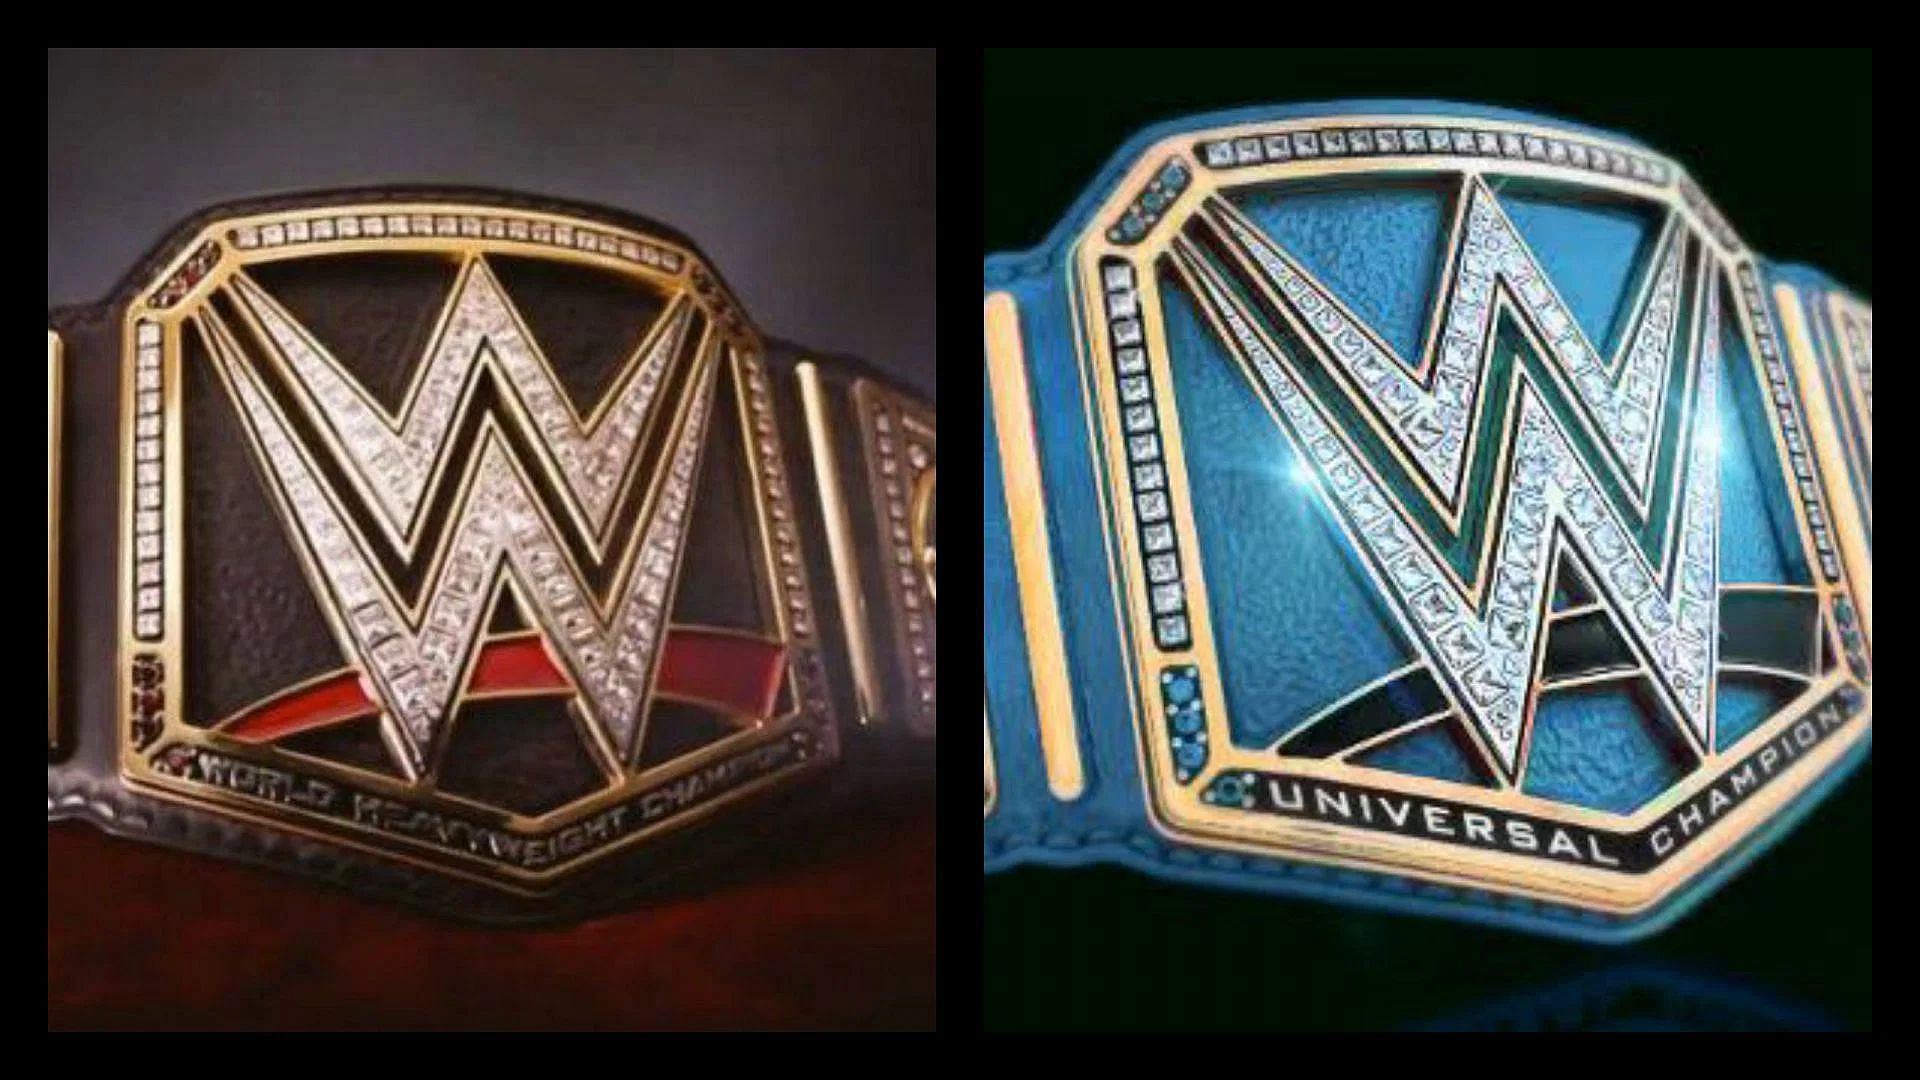 Undisputed WWE Universal Championship Replica Title Belt